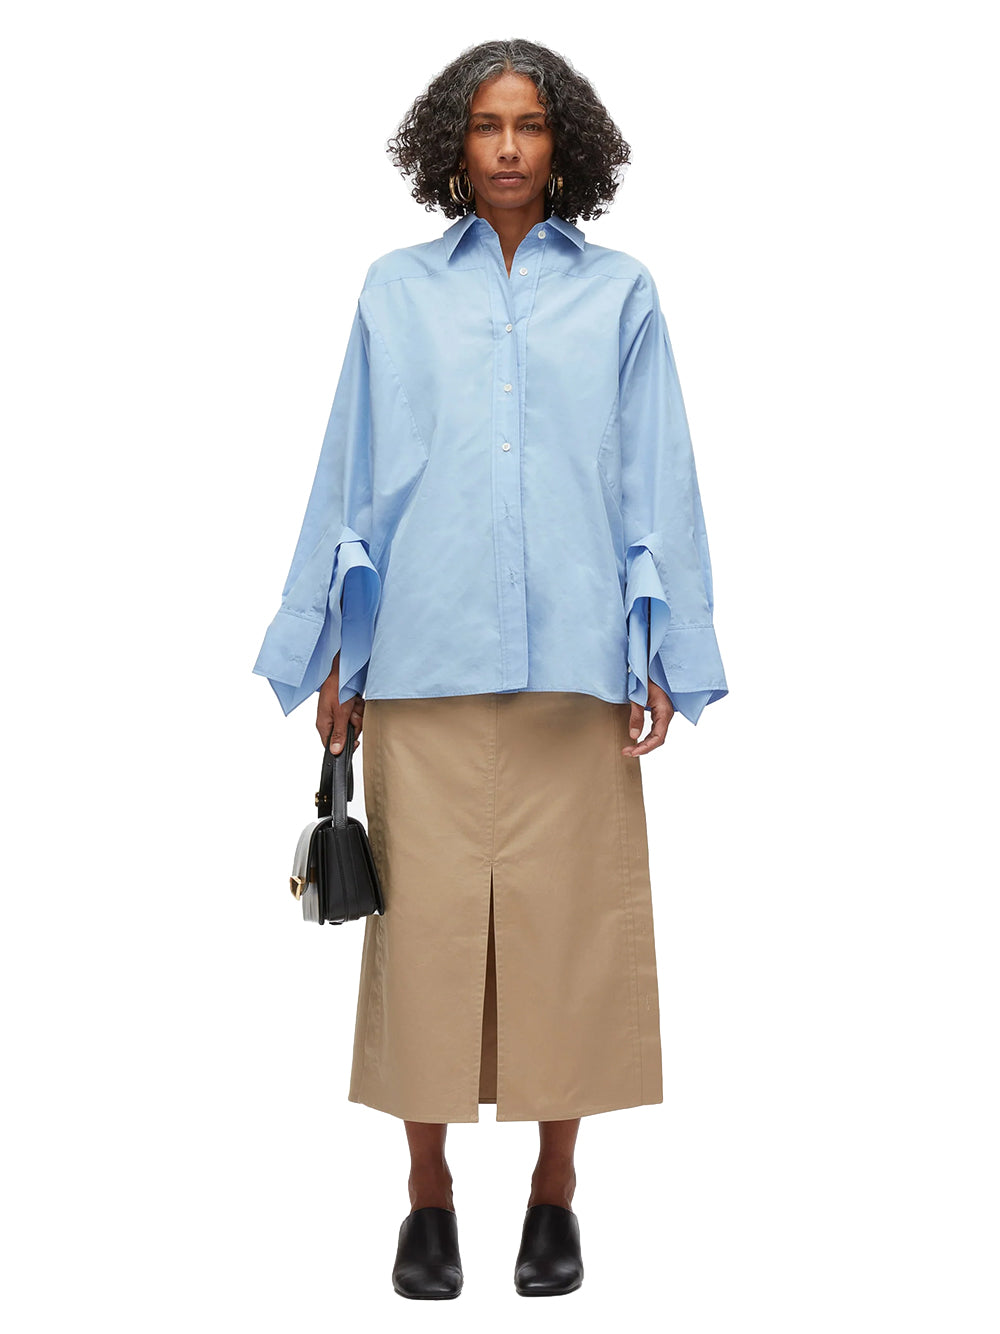 Oversize Shirt with Cascade Cuff (Oxford Blue)